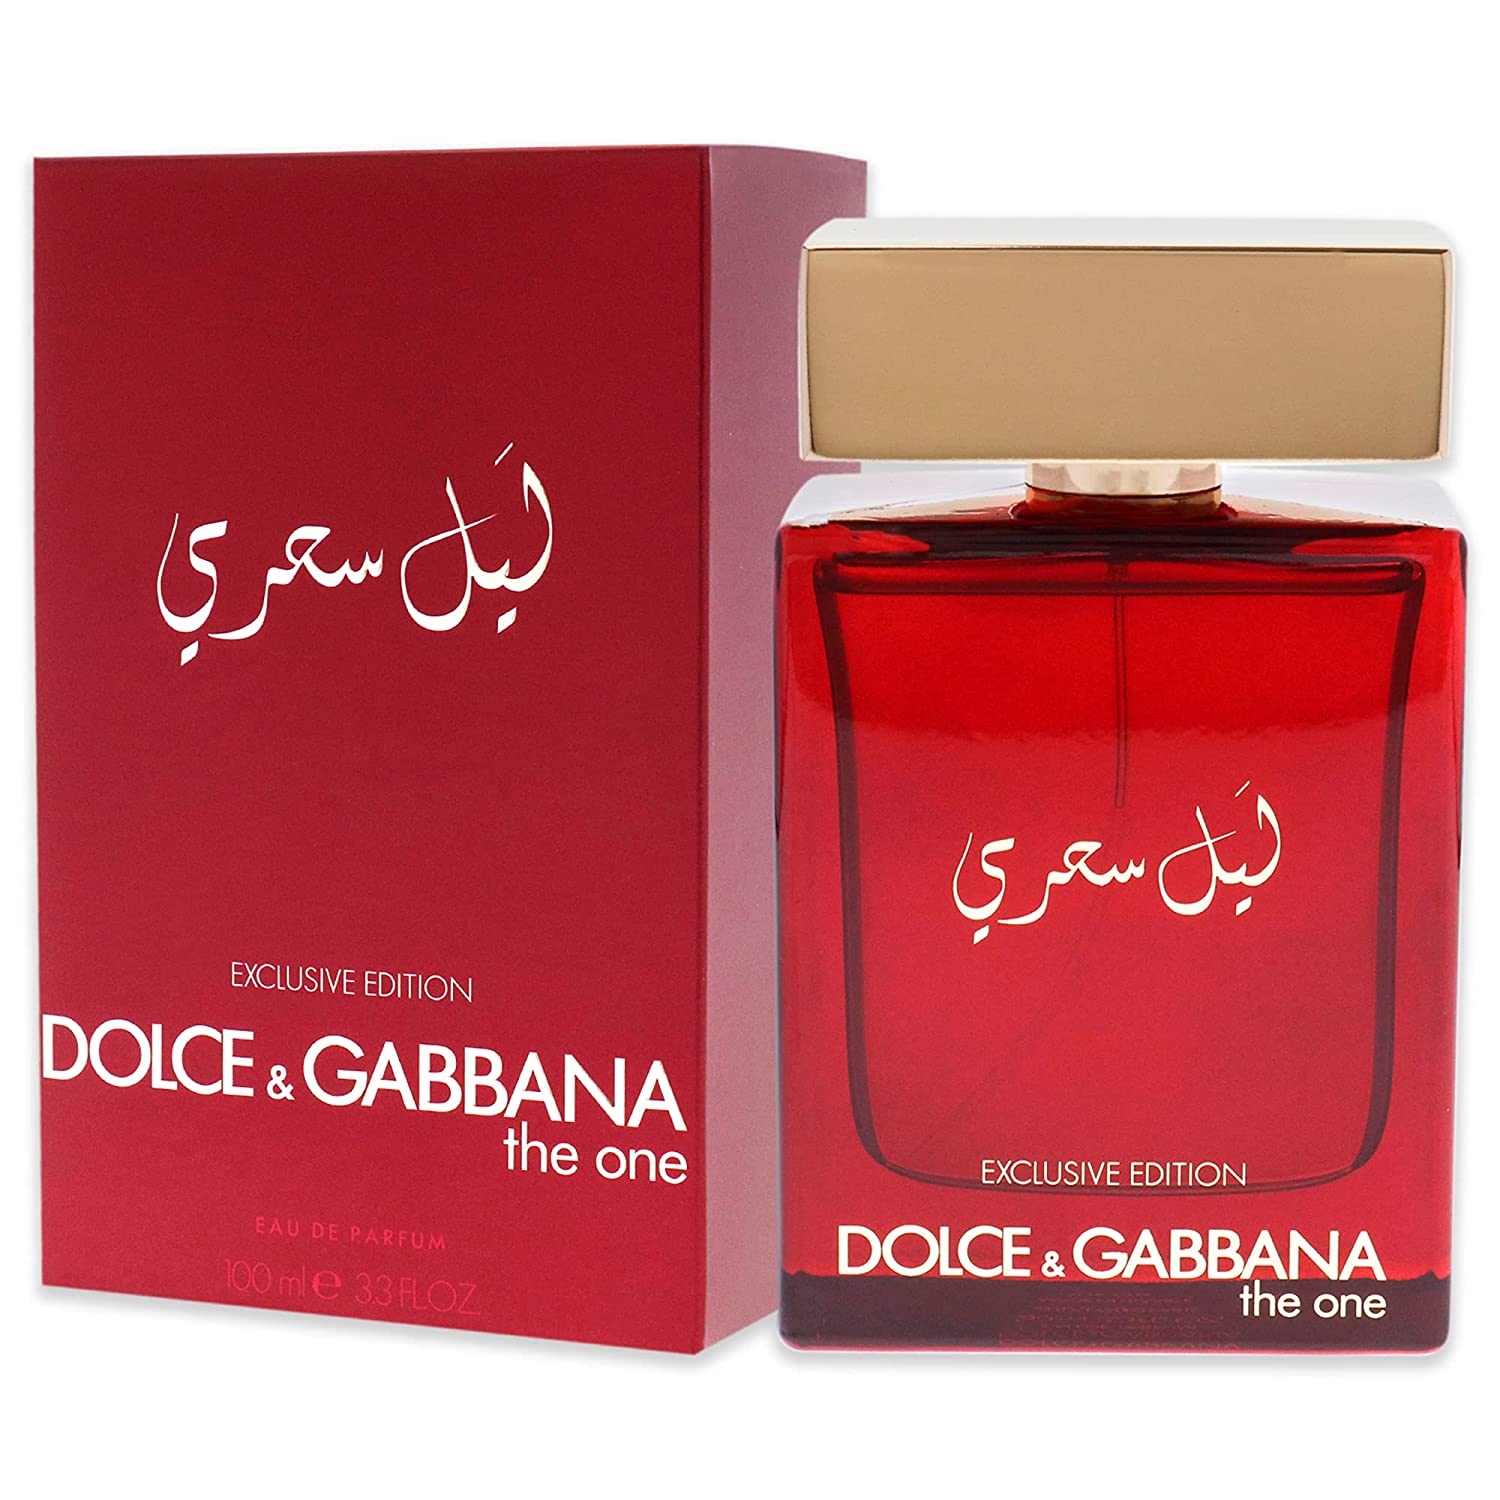 The Fire (Louis Vuitton Nuit de Feu) Arabic perfume